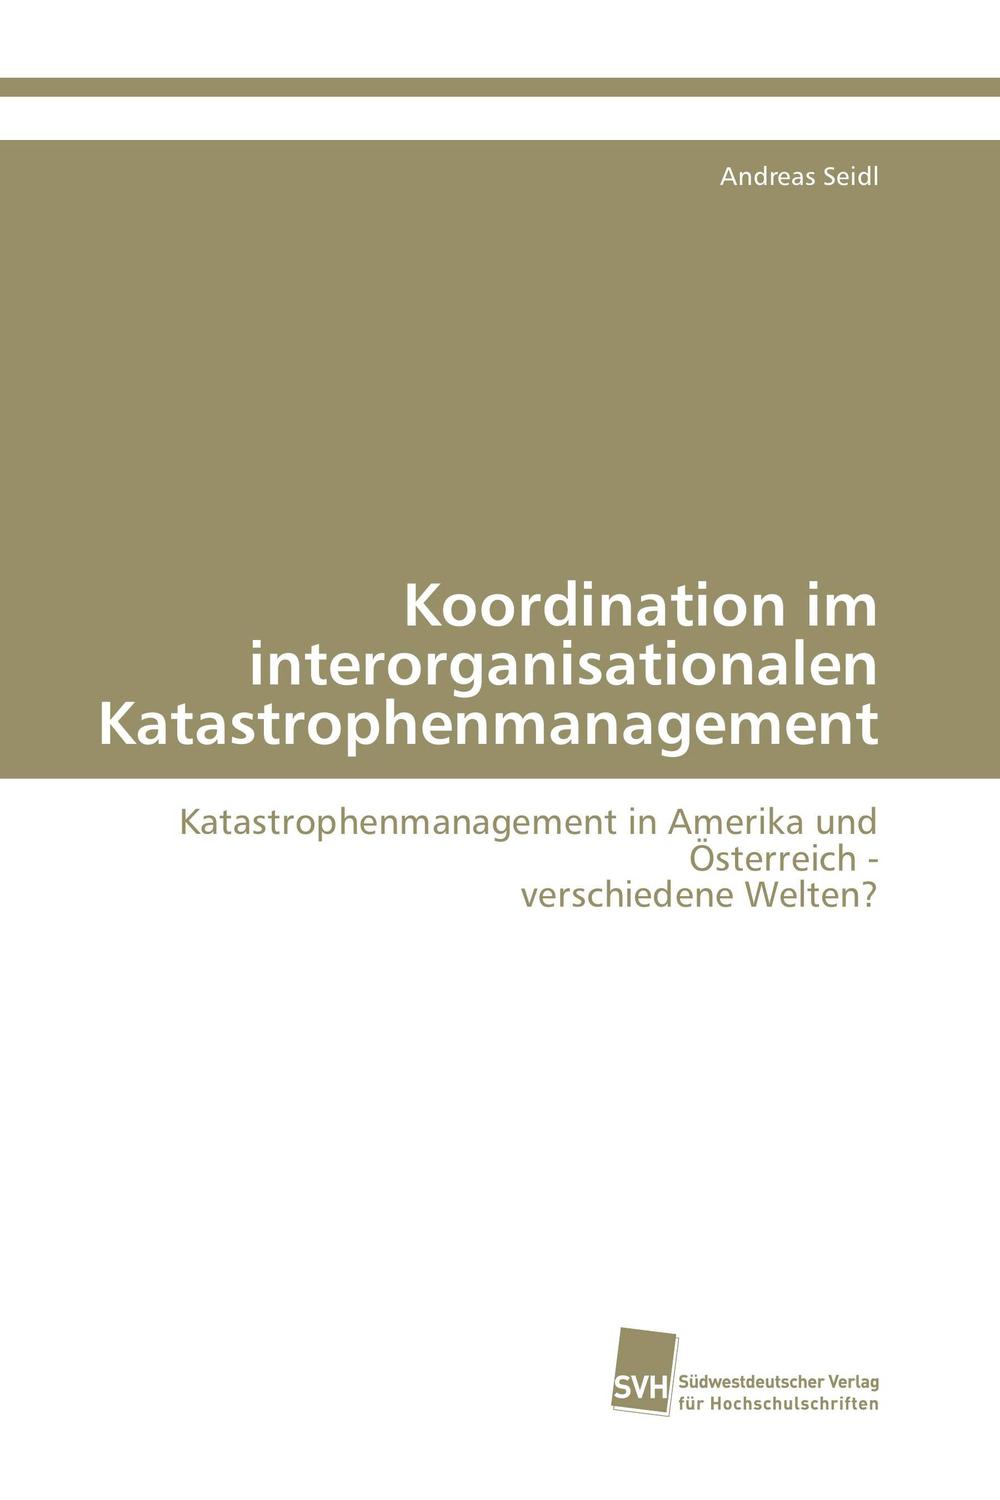 Koordination im interorganisationalen Katastrophenmanagement - Andreas Seidl